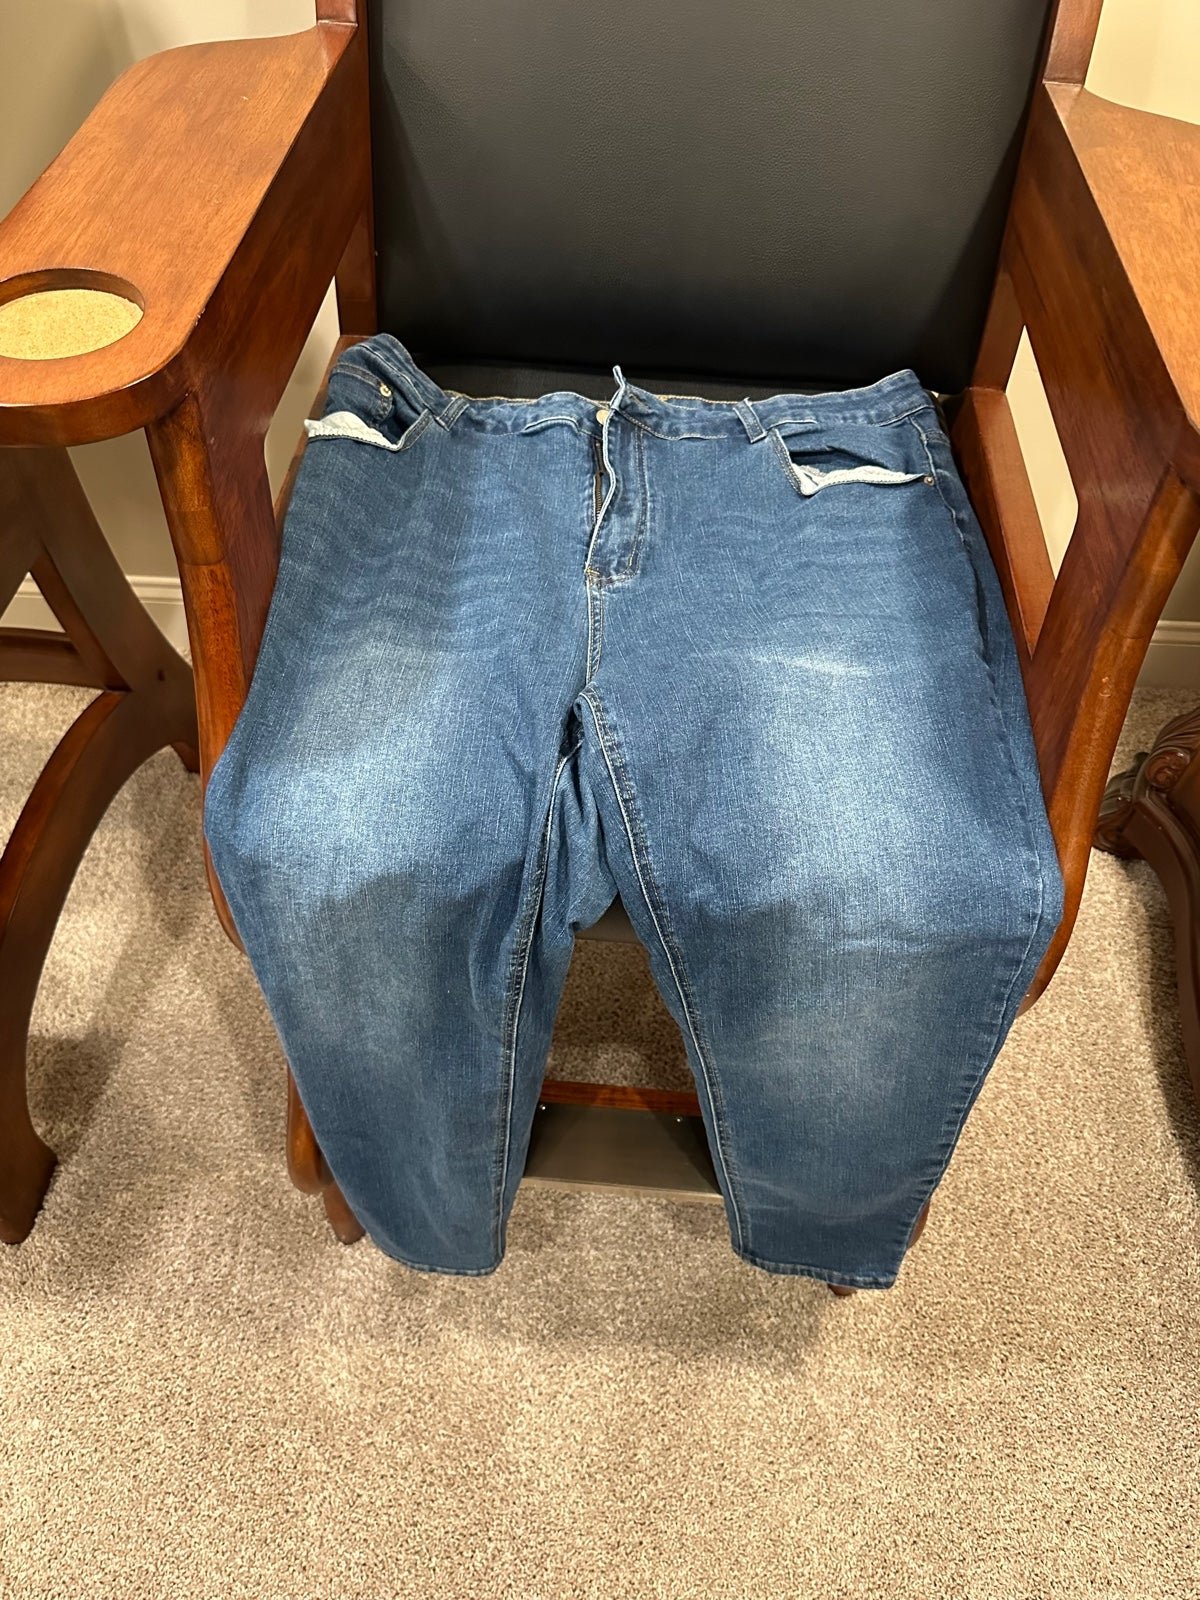 Classic Ten pairs of Size 22 Jeans hIq8YgTSm Wholesale